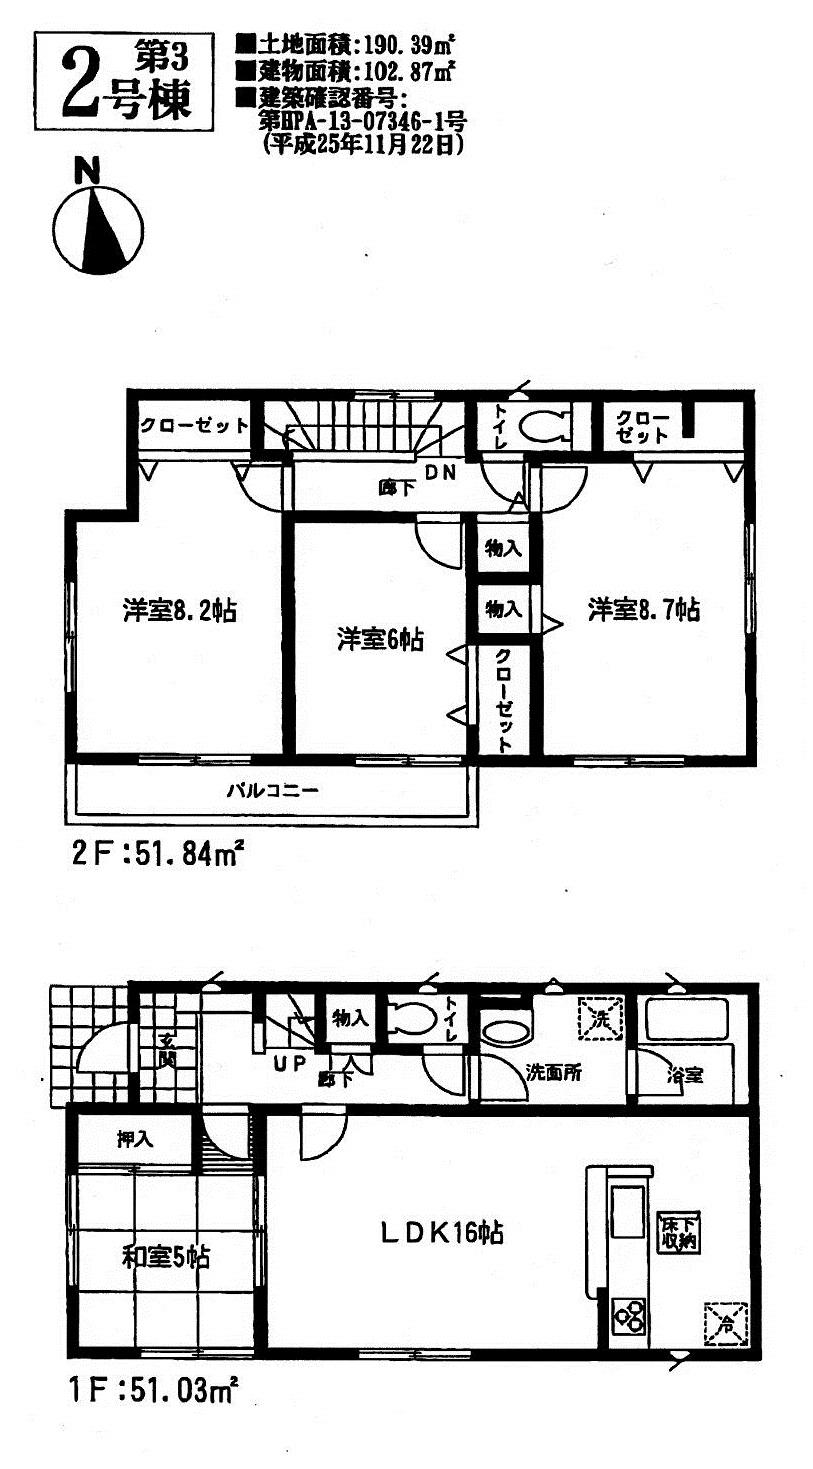 Floor plan. (Building 2), Price 21,800,000 yen, 4LDK, Land area 190.39 sq m , Building area 102.87 sq m